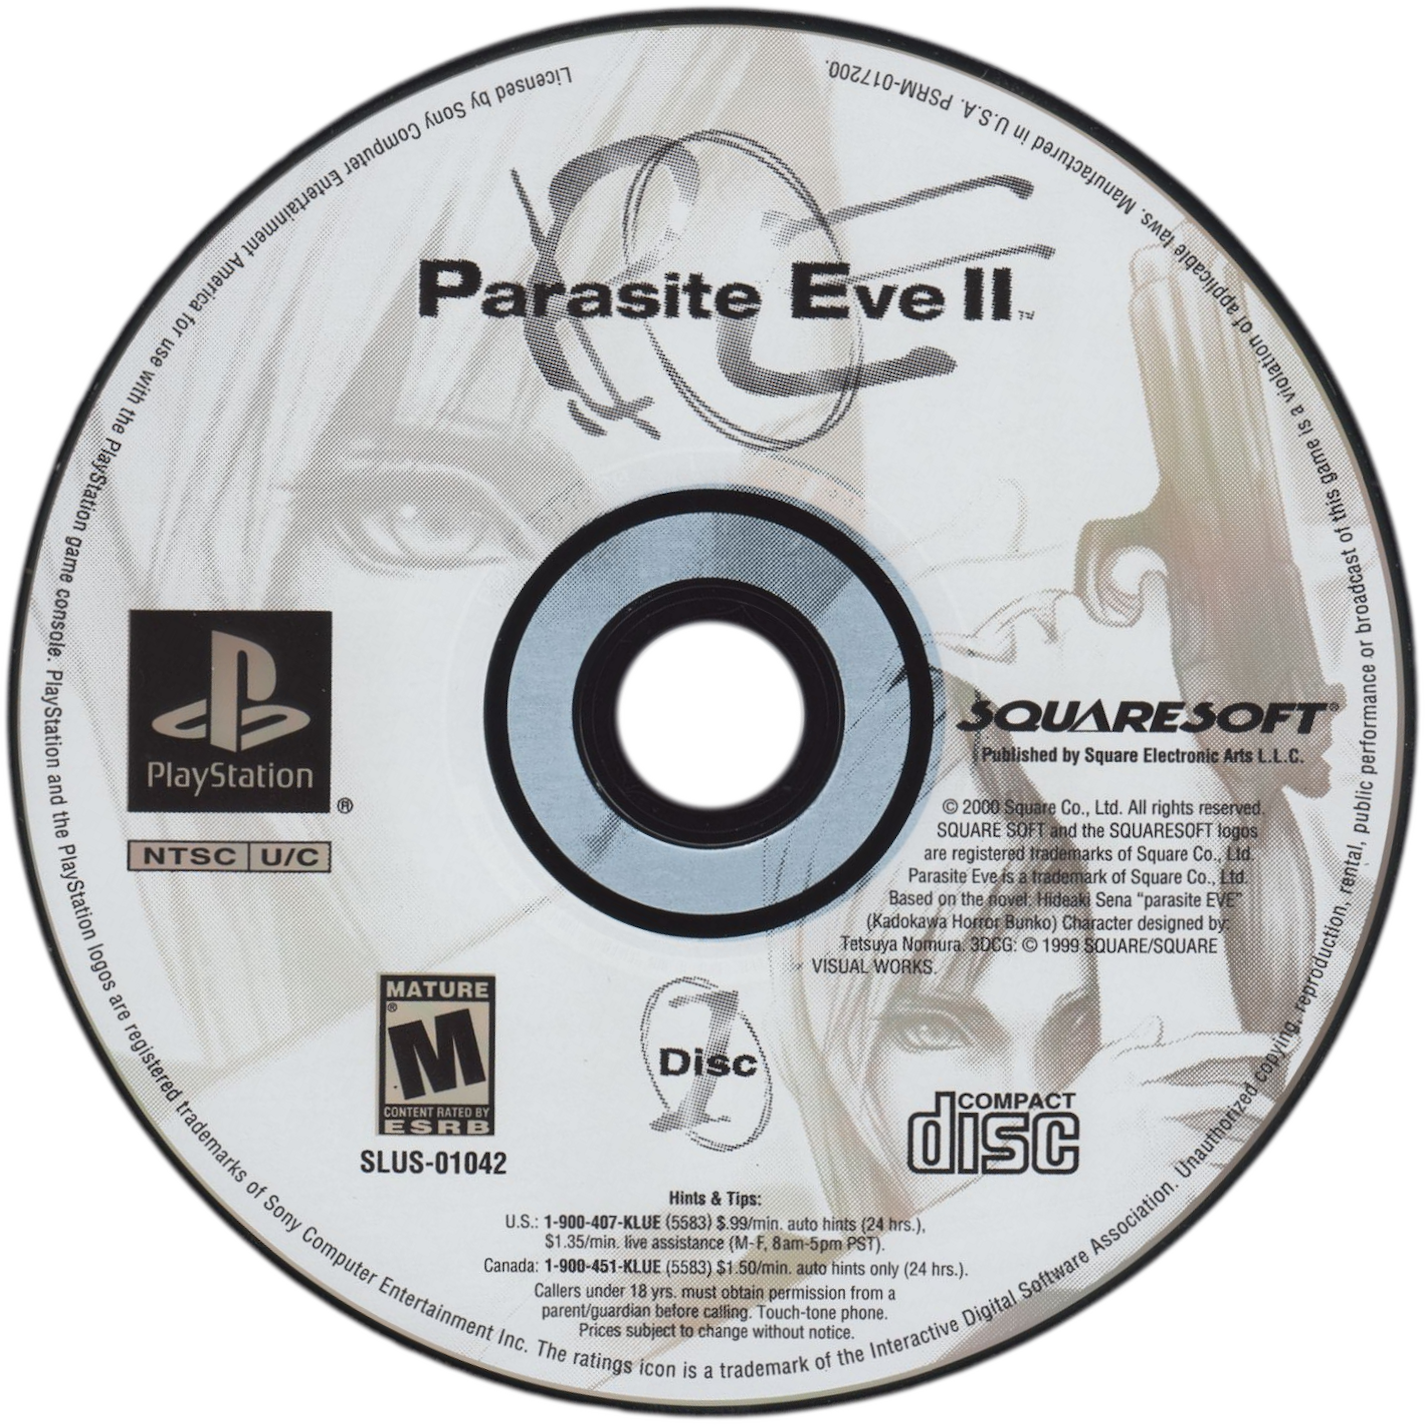 Fotos: Parasite Eve II (PlayStation) - 08/01/2020 - UOL Start